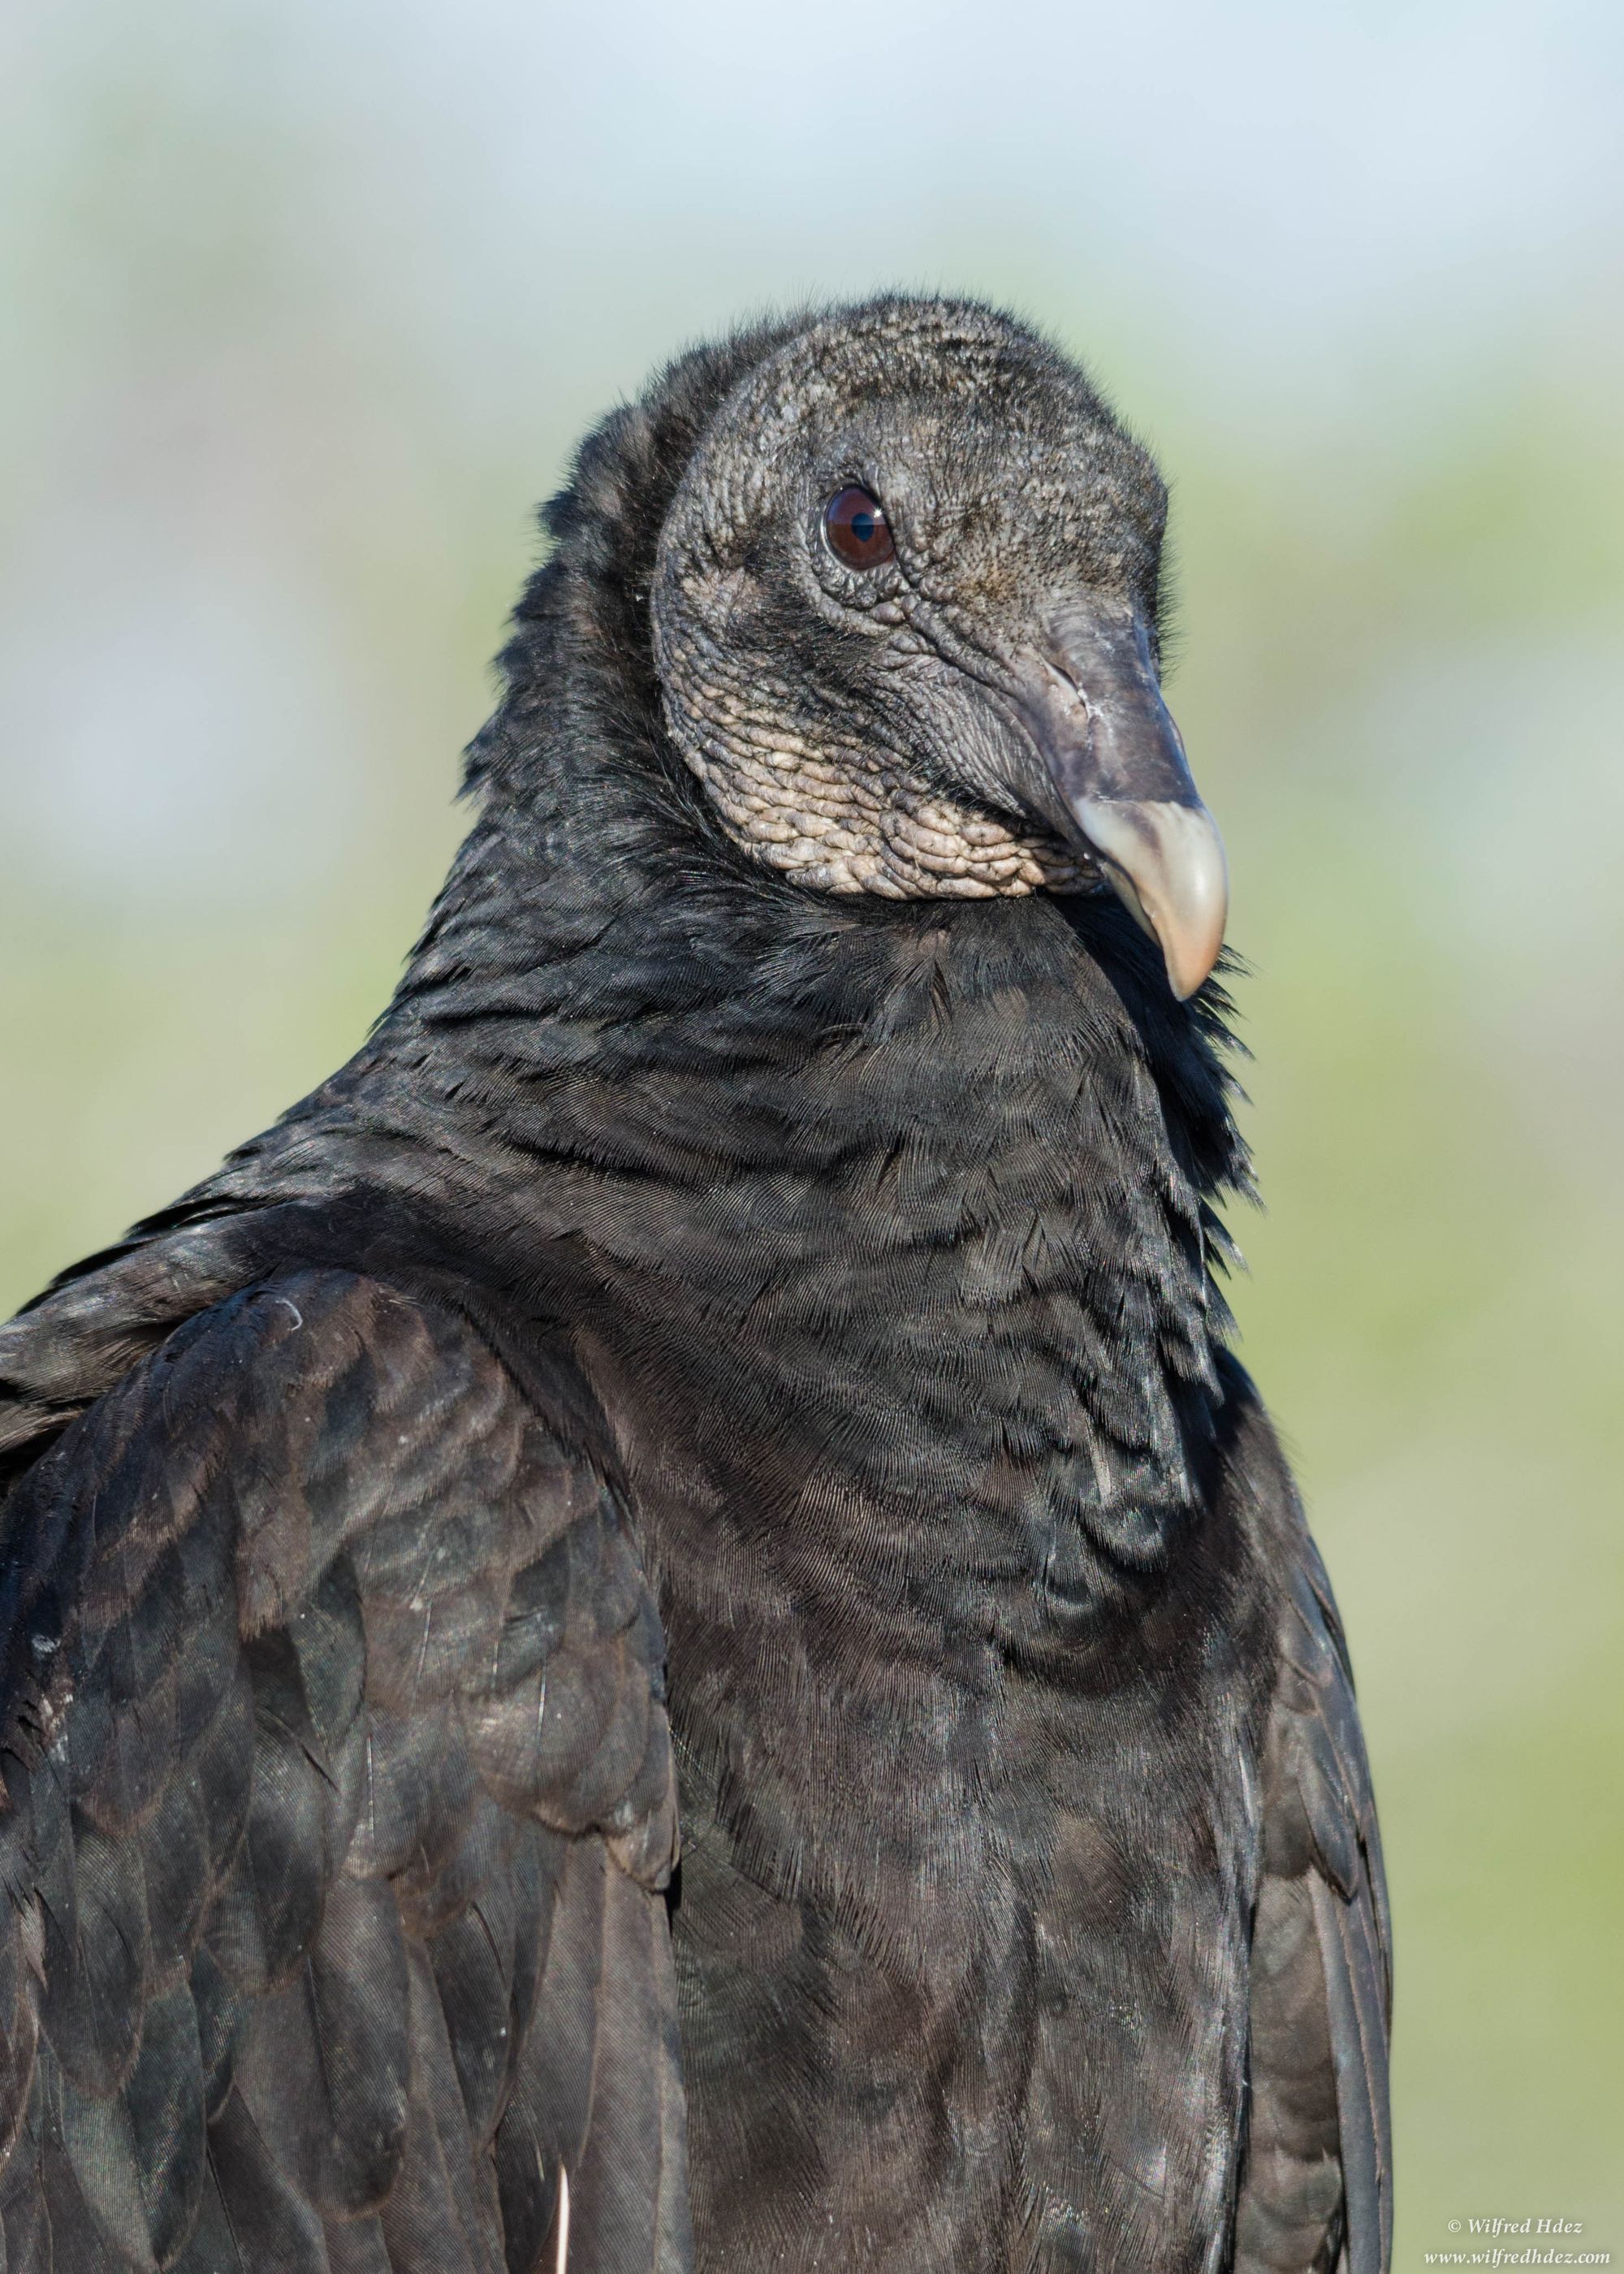 Black vulture by Wilfred Hdez, Flickr